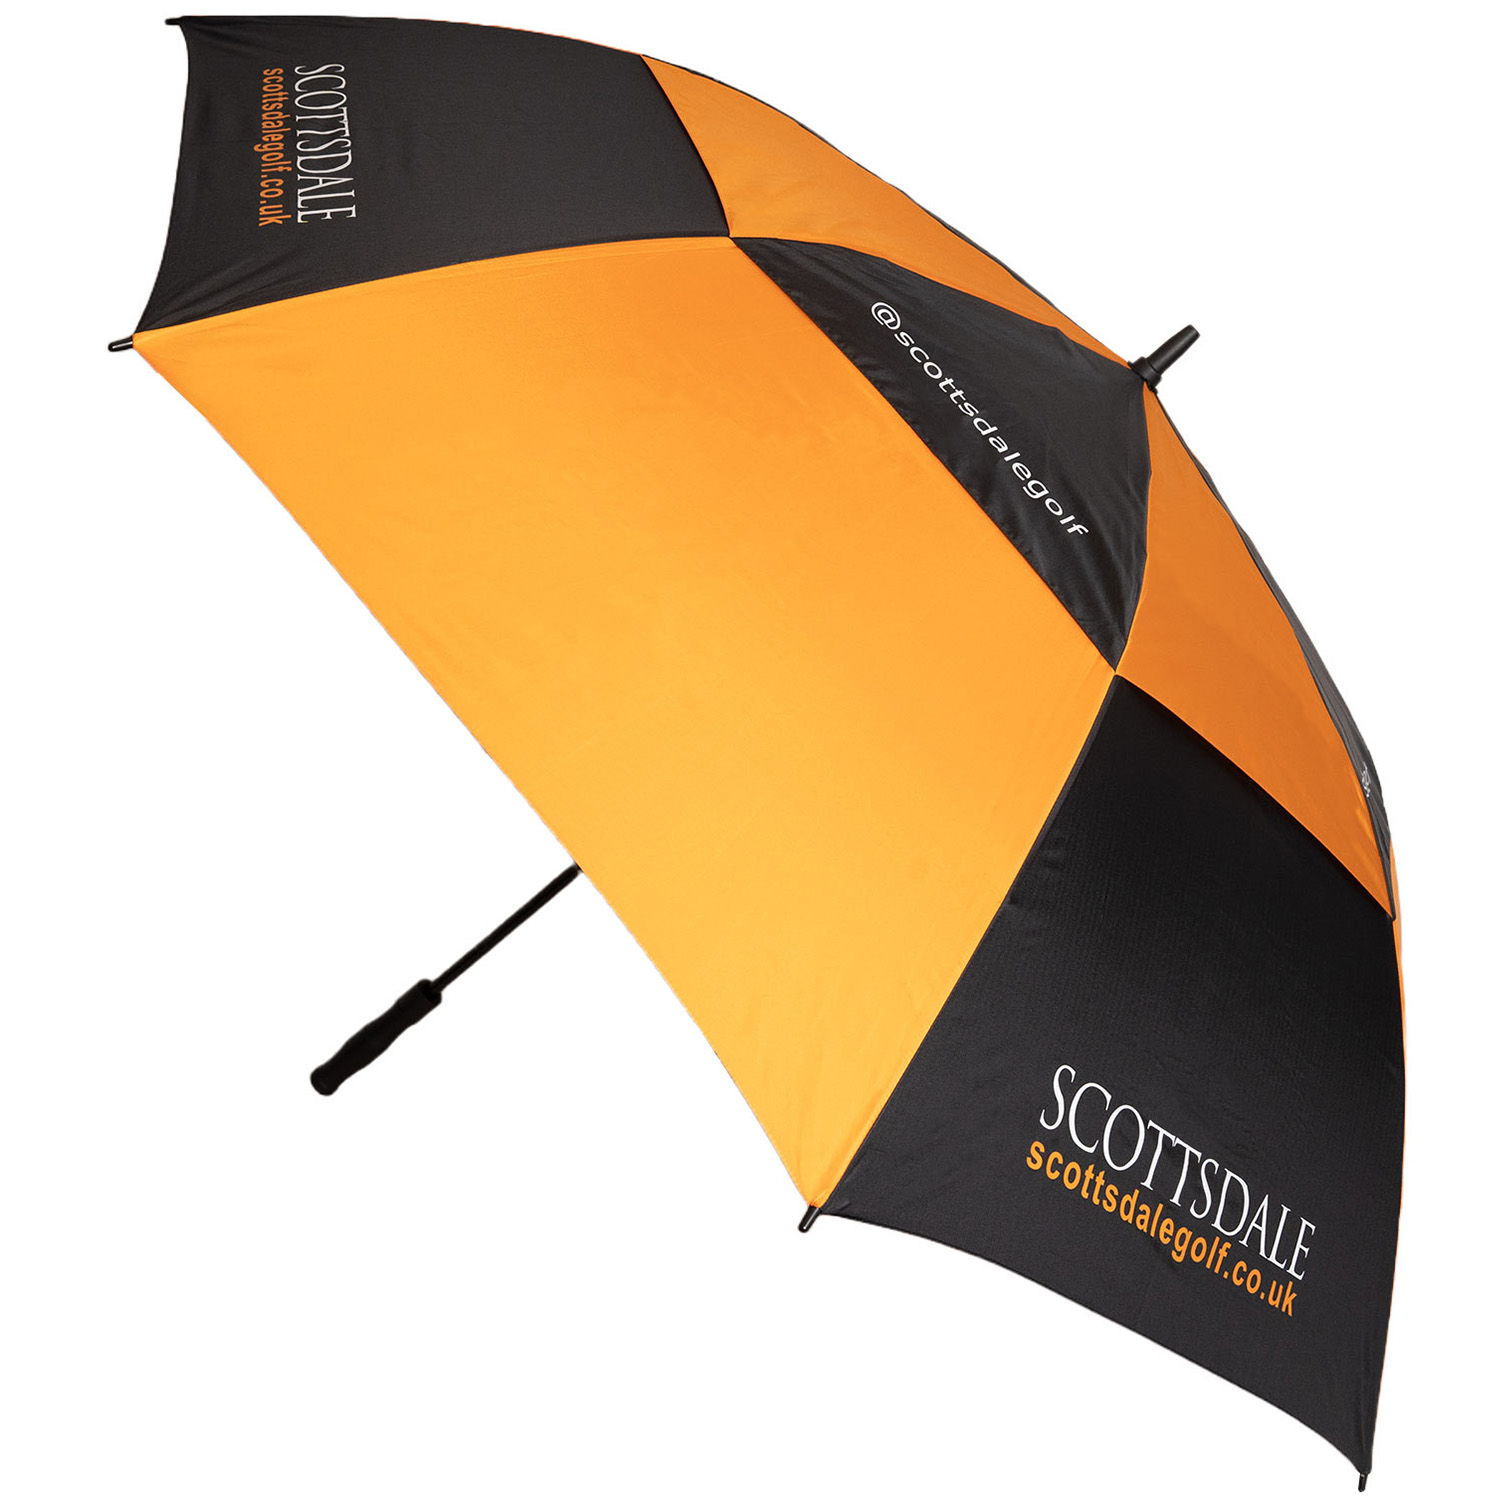 Scottsdale Golf 25th Anniversary Double Canopy Golf Umbrella